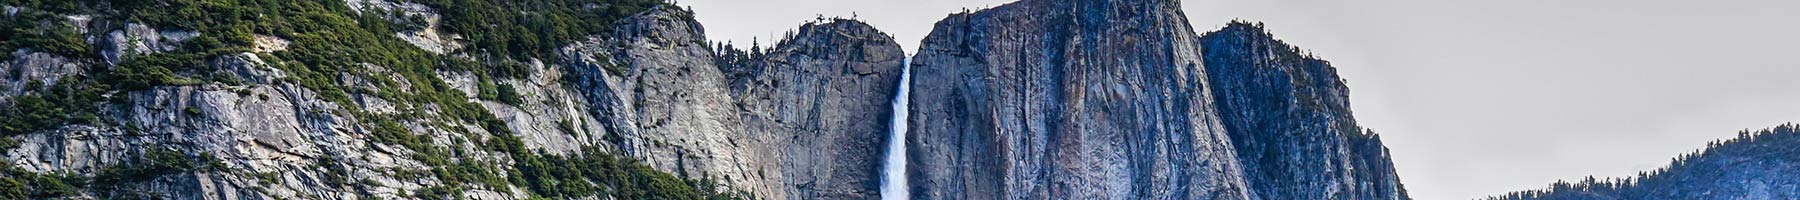 waterfall at Yosemite Park